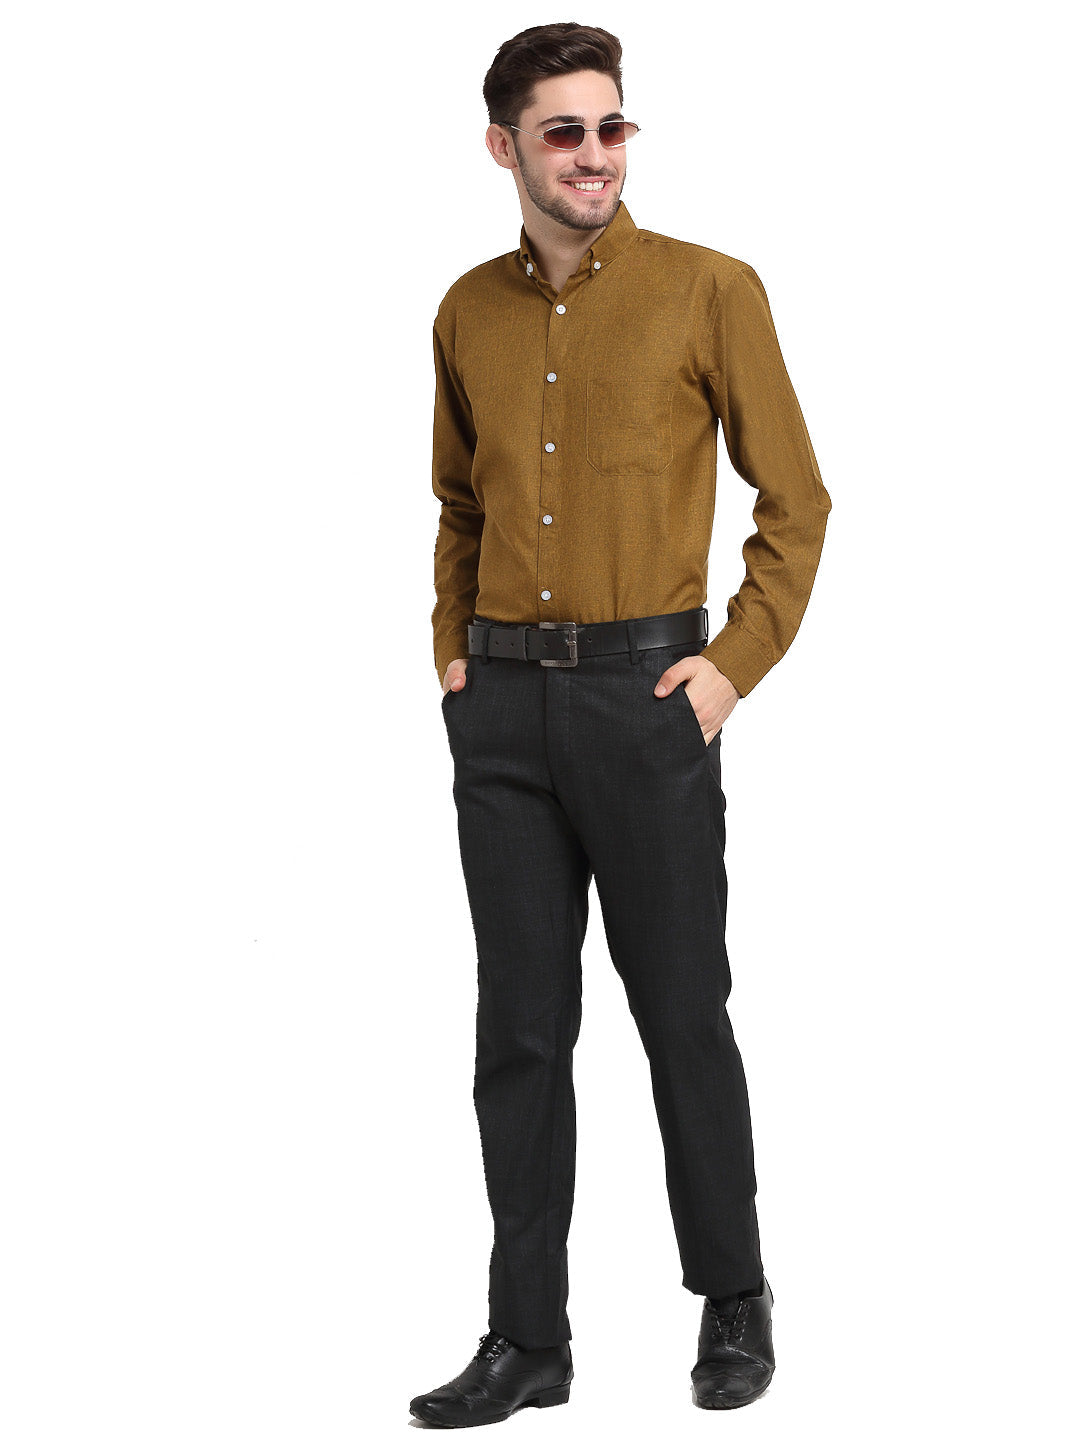 Men's Olive Button Down Collar Cotton Formal Shirt ( SF 785Olive ) - Jainish